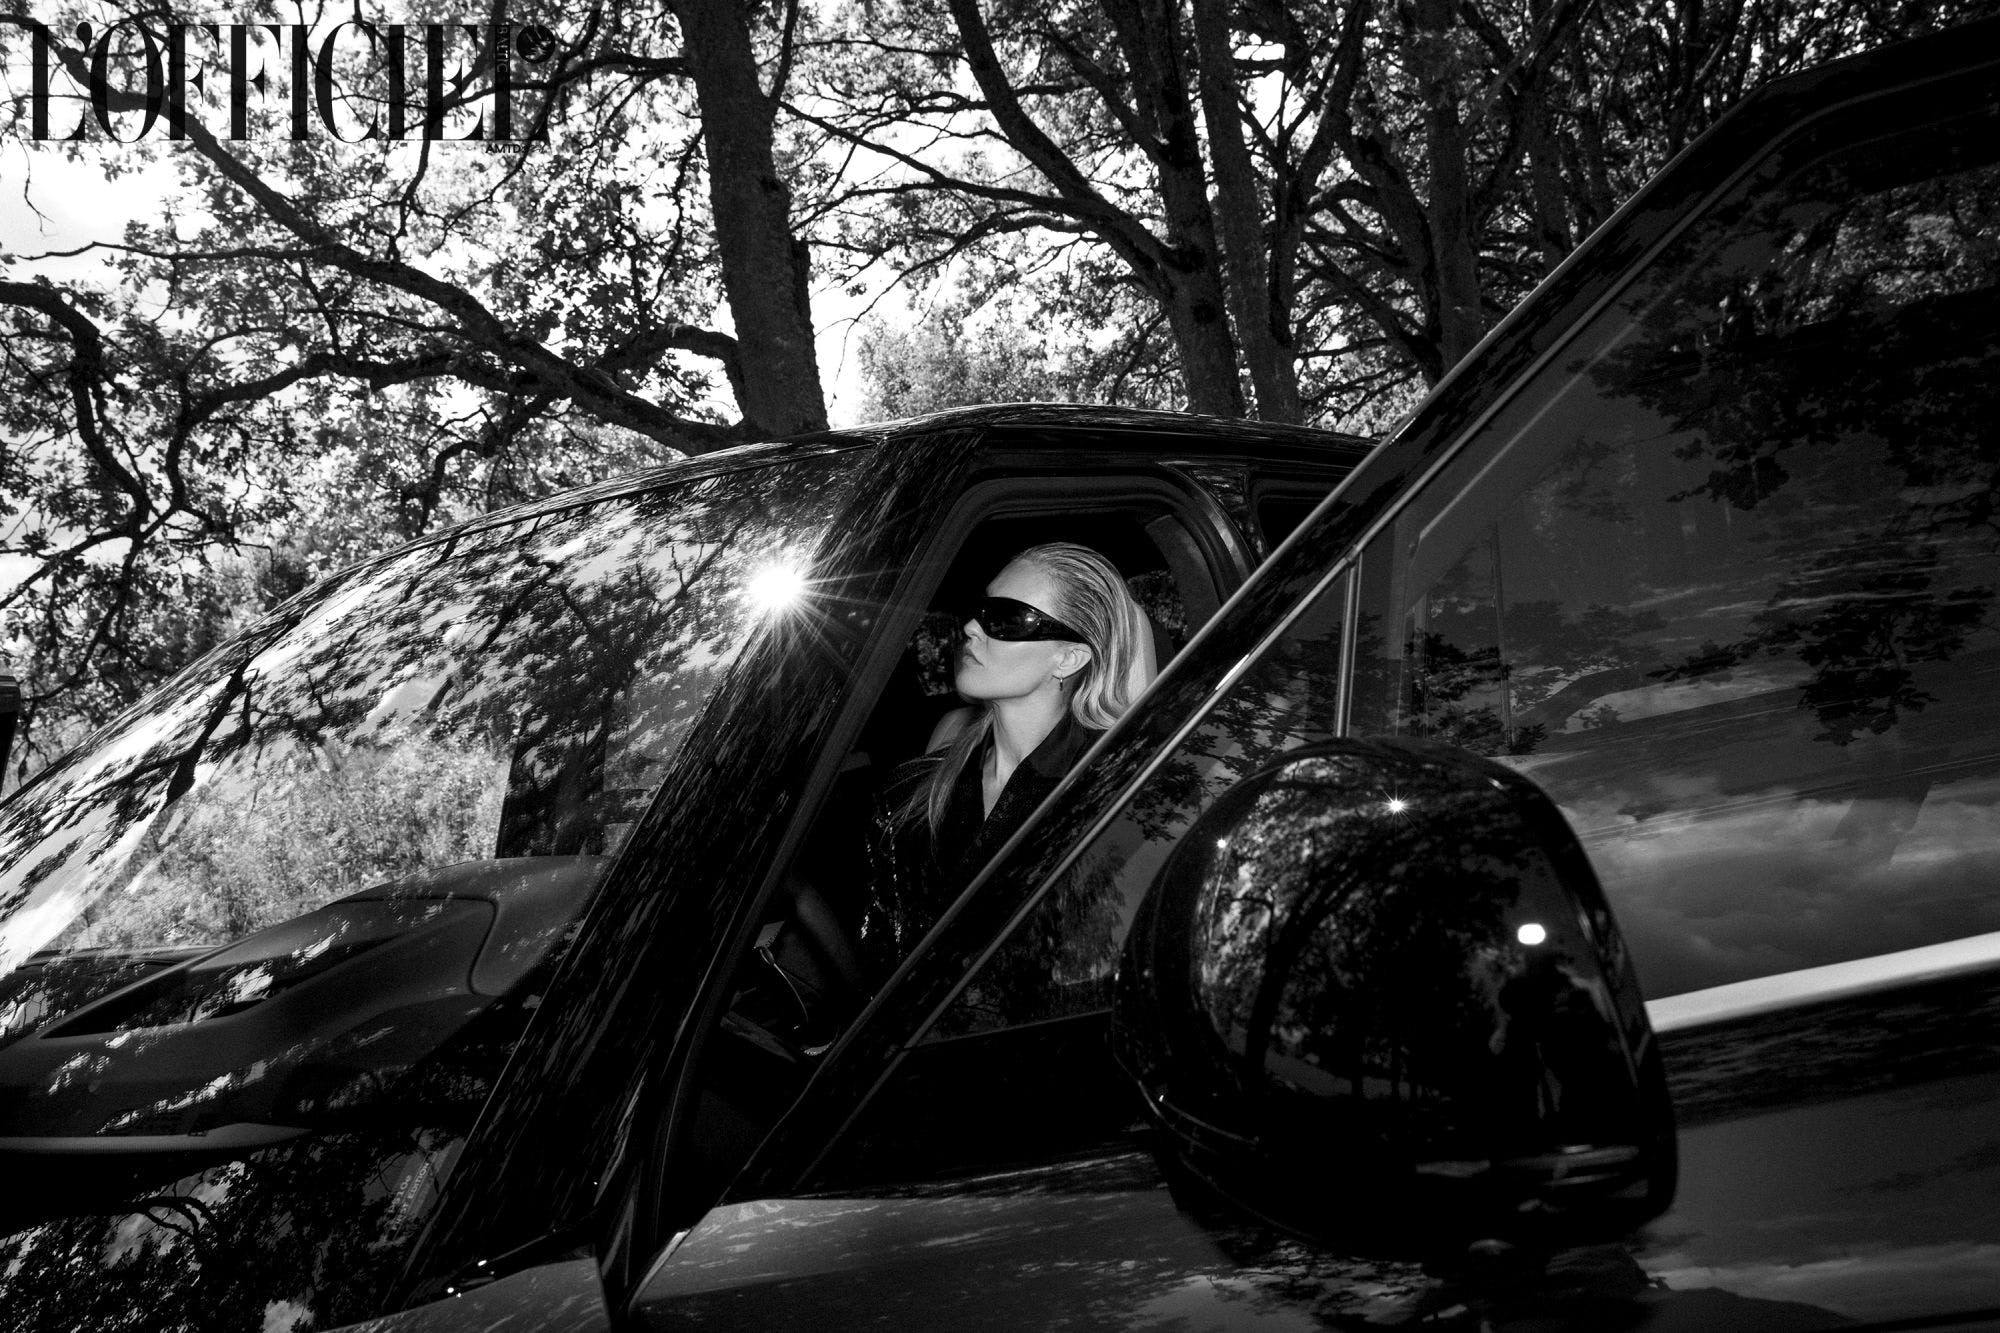 face person photography portrait car vehicle sunglasses tree spoke alloy wheel